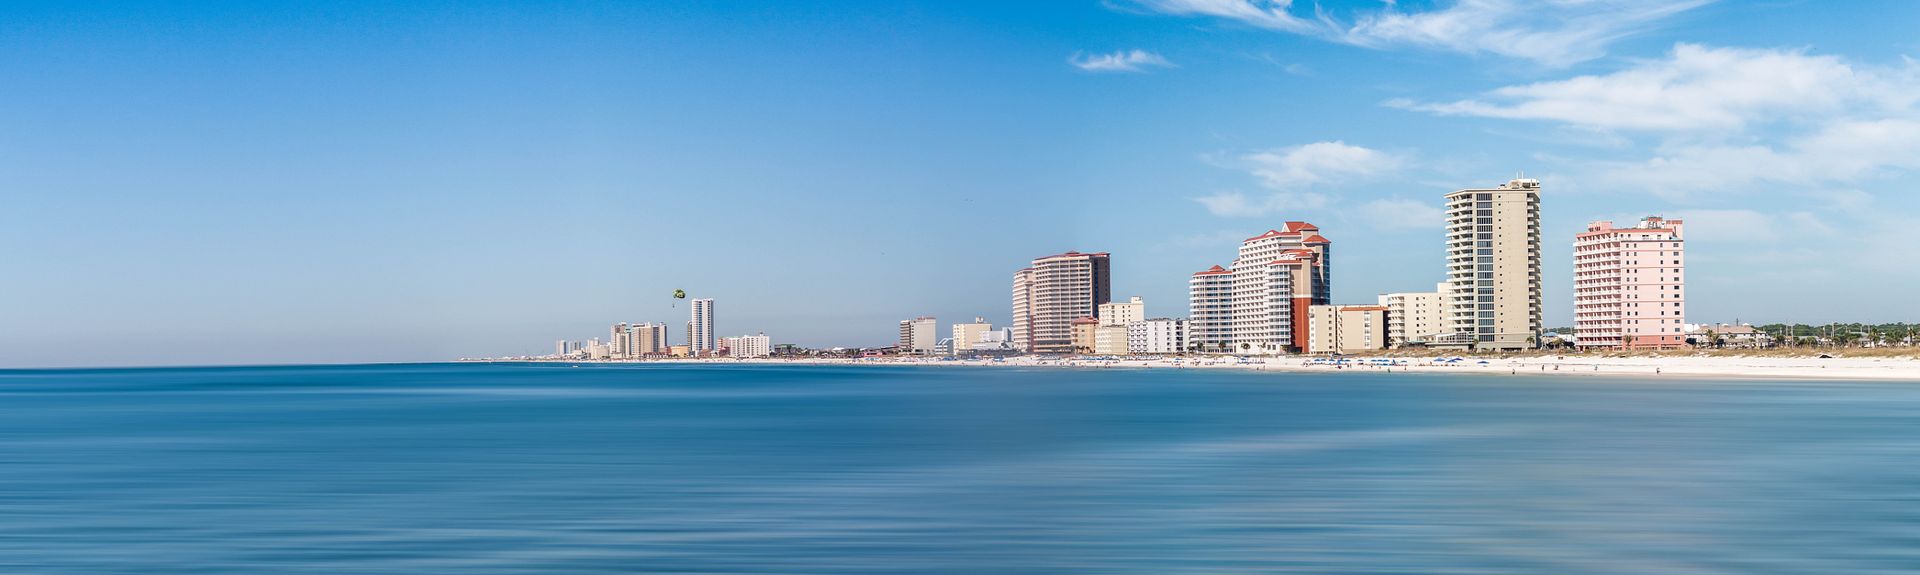 Vrbo Gulf Shores Al Vacation Rentals House Rentals More